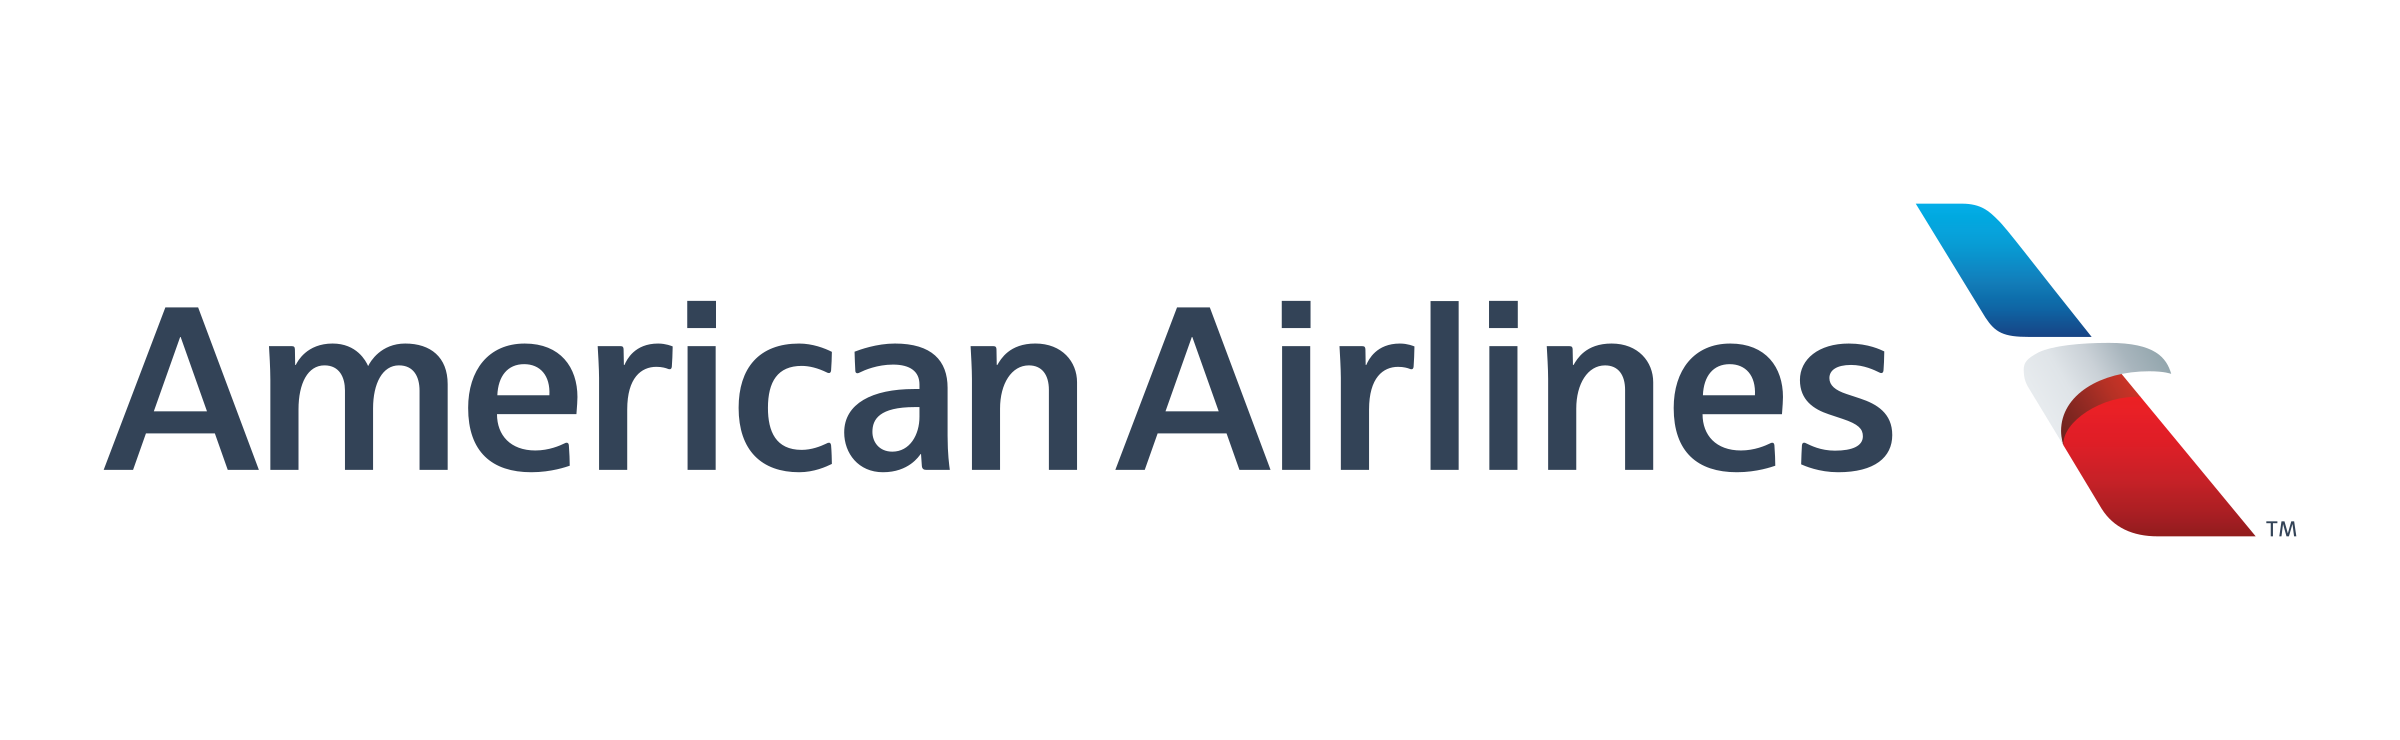 Logo de American Airlines SVG